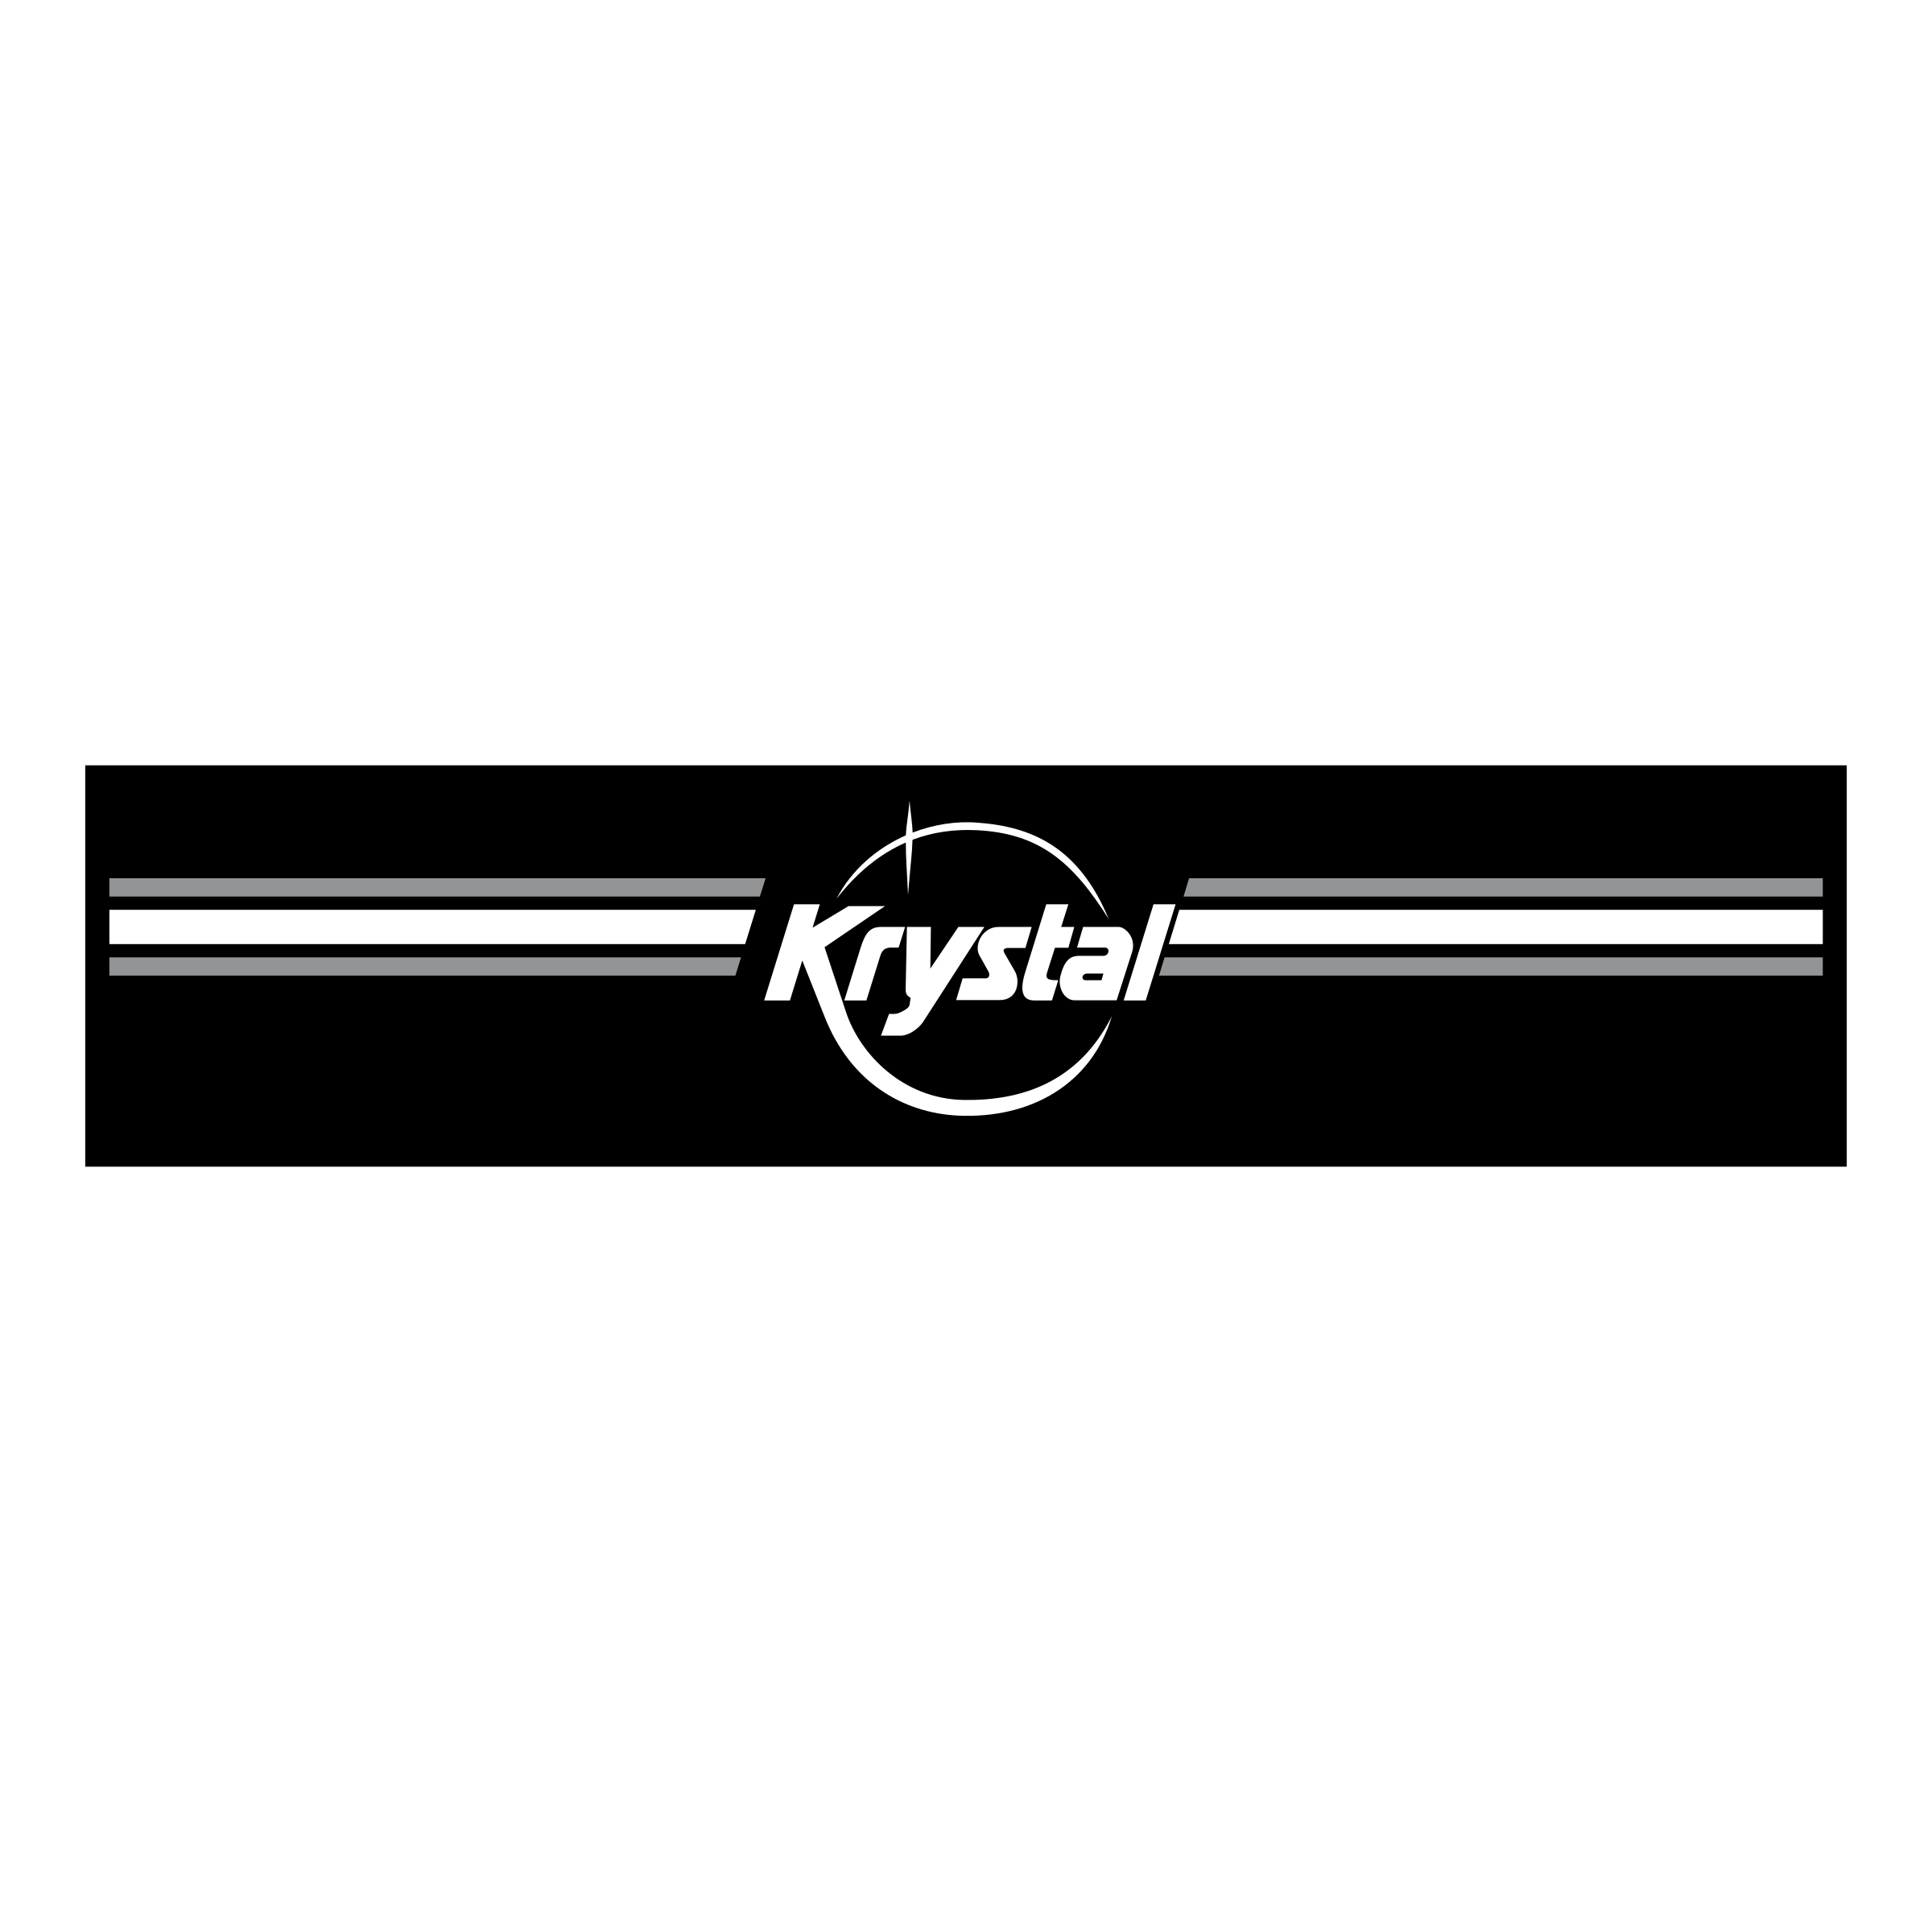 Krystal Logo - Krystal Logo PNG Transparent & SVG Vector - Freebie Supply